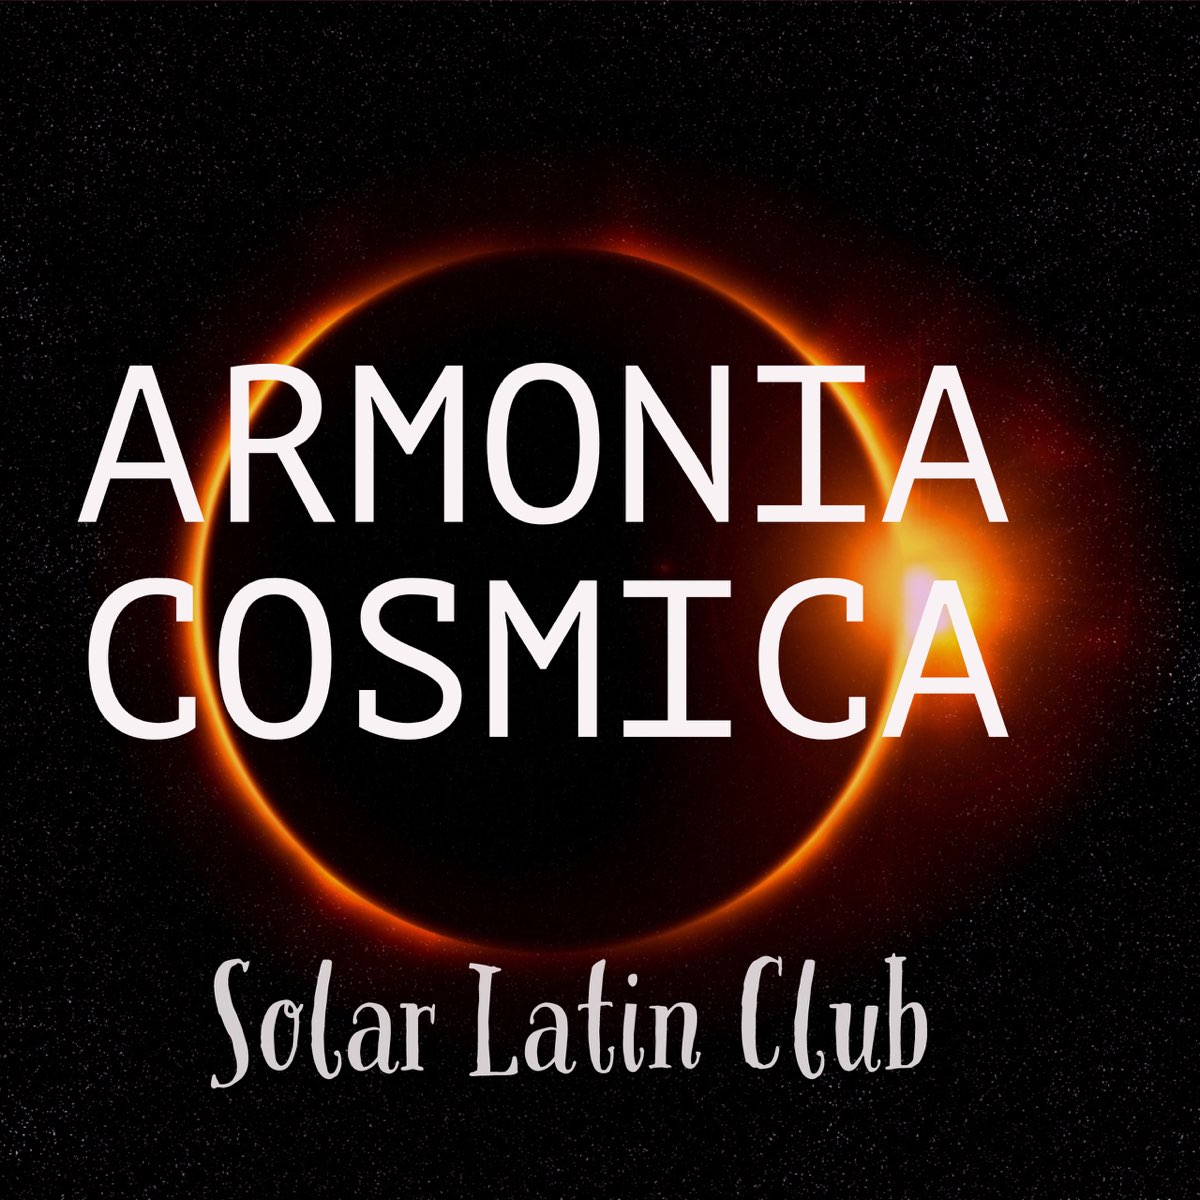 Armonia Cosmica - Single by Solar Latin Club on Apple Music